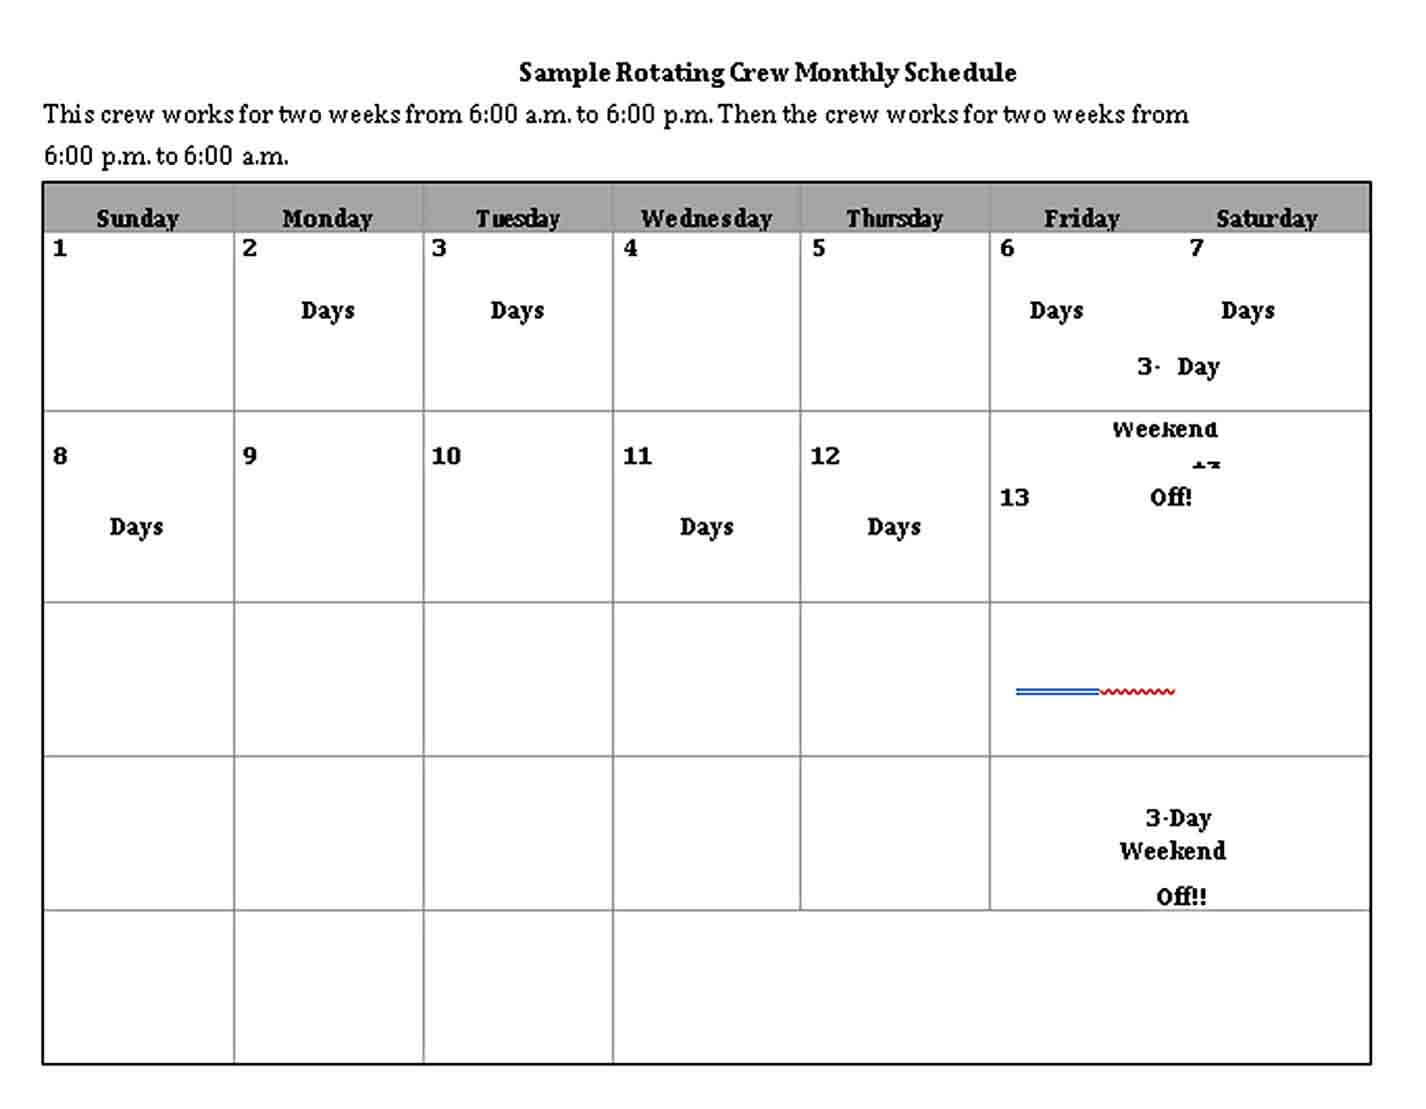 Monthly Schedule